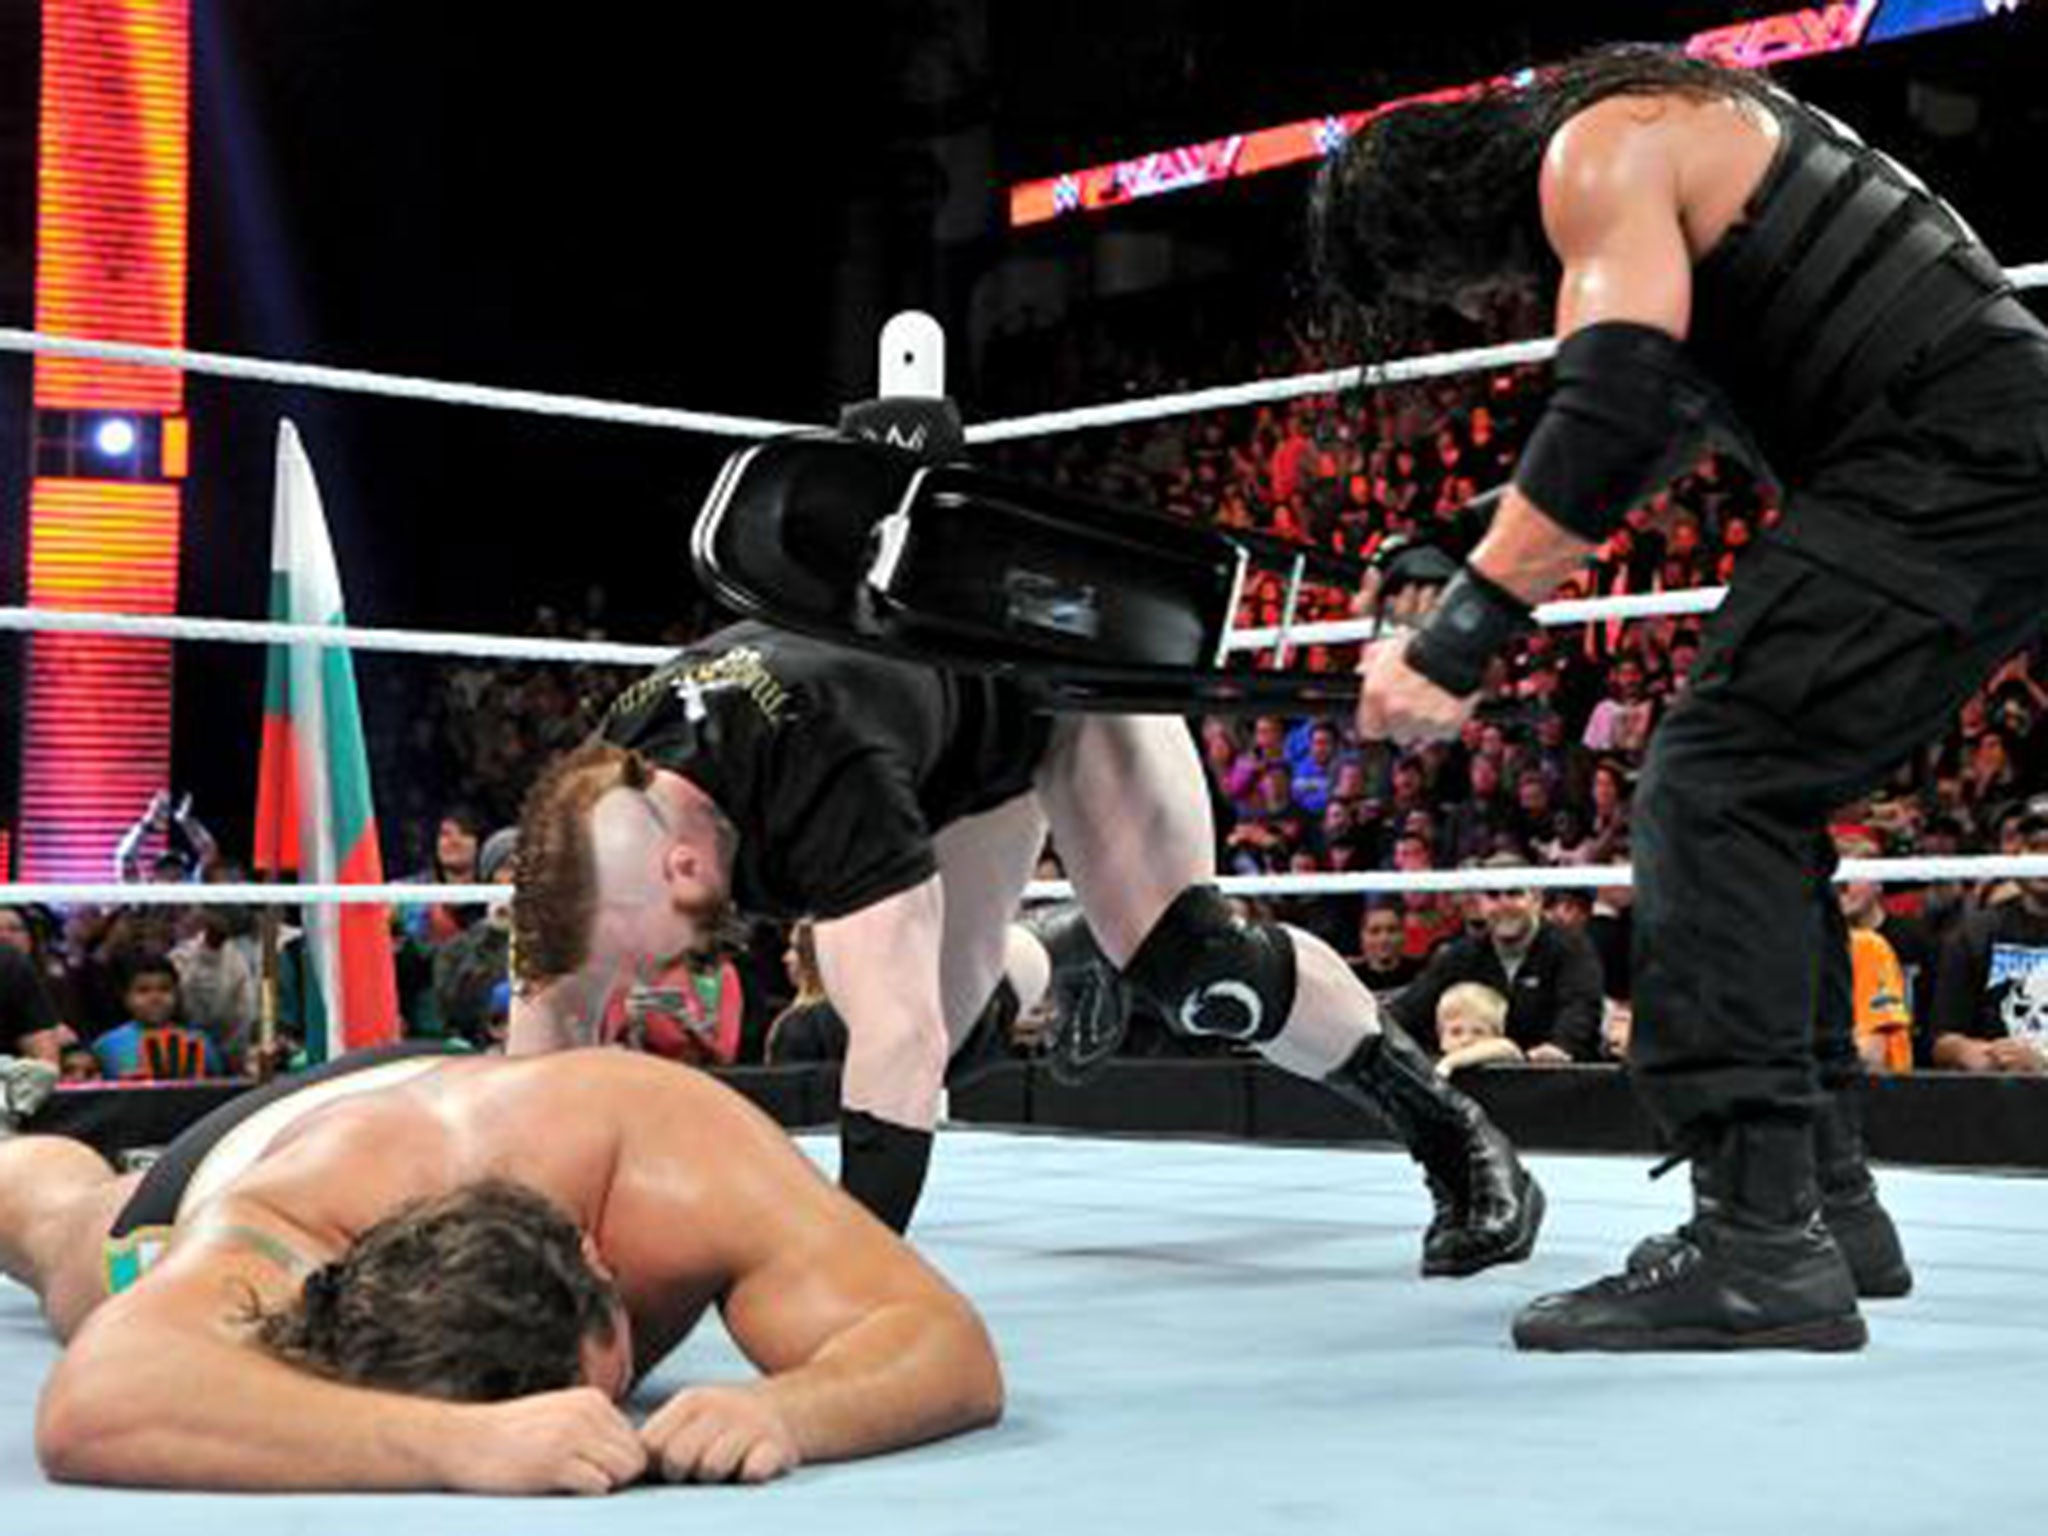 Roman Reigns hits Sheamus with a chair